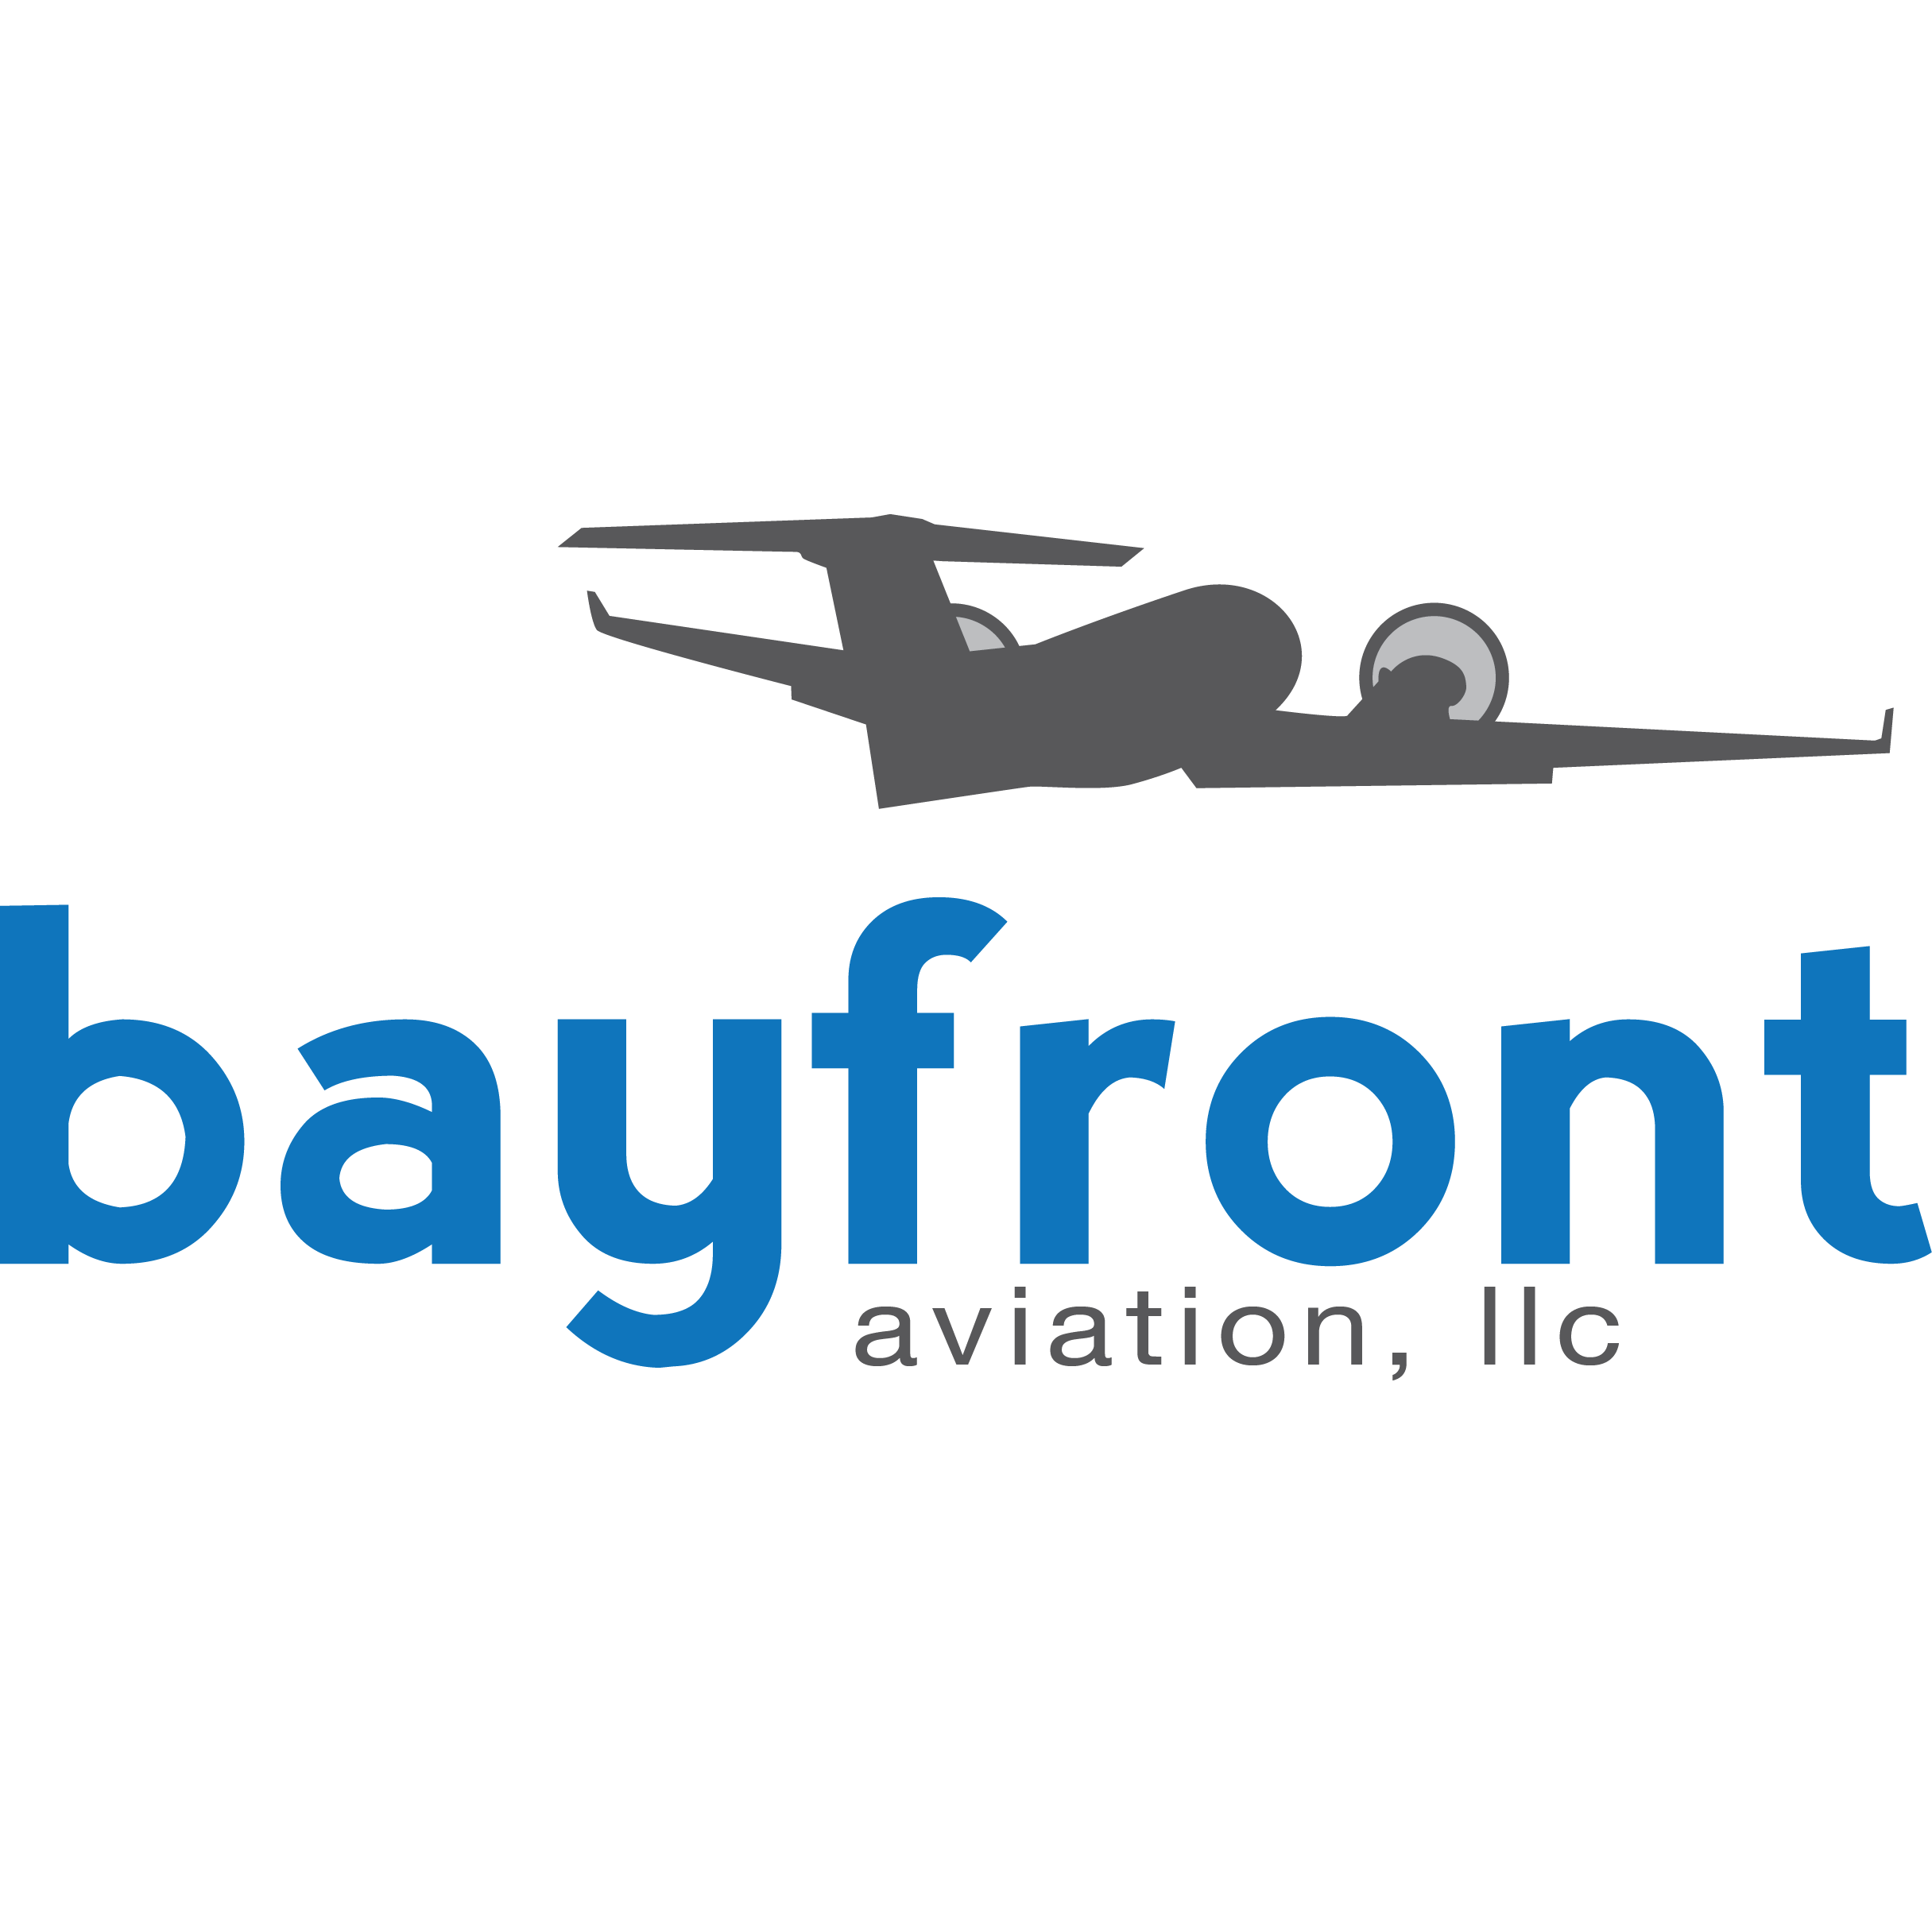 Bayfront Aviation Logo Final (no lighthouse) square.png